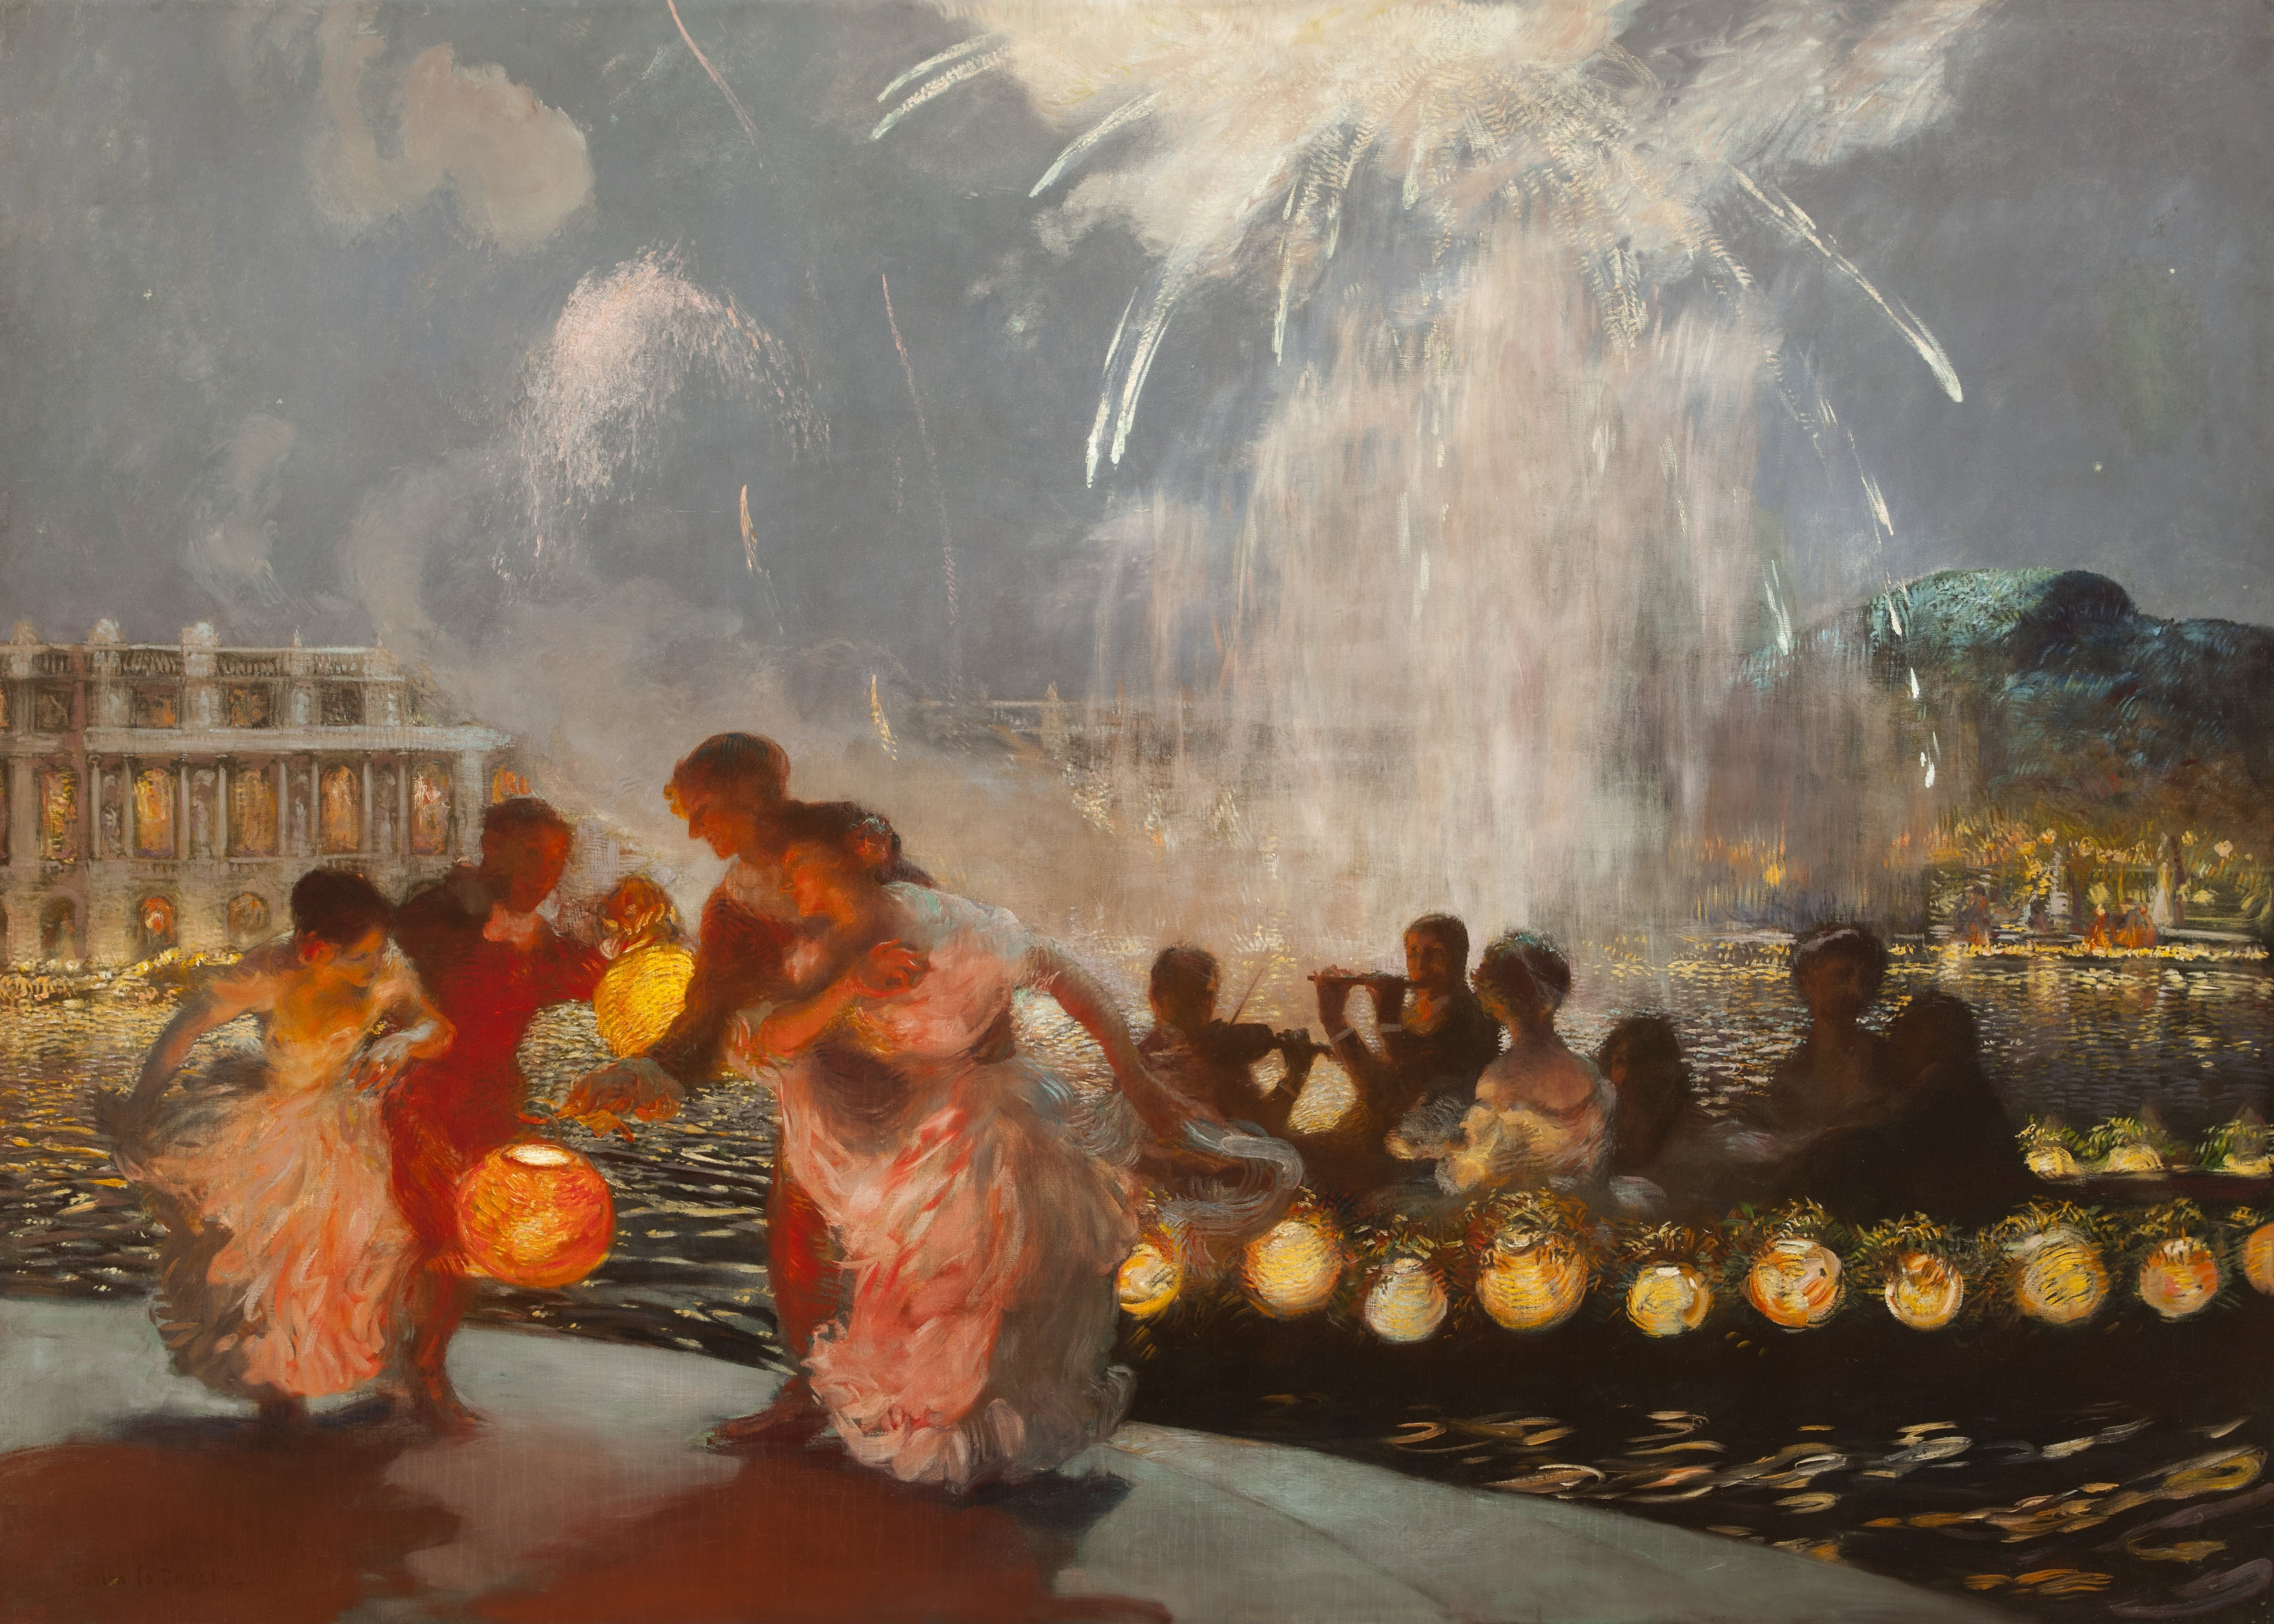 The Joyous Festival by Gaston La Touche - ca. 1906 - 82 1/2 x 113 1/2 inches Dixon Gallery and Gardens